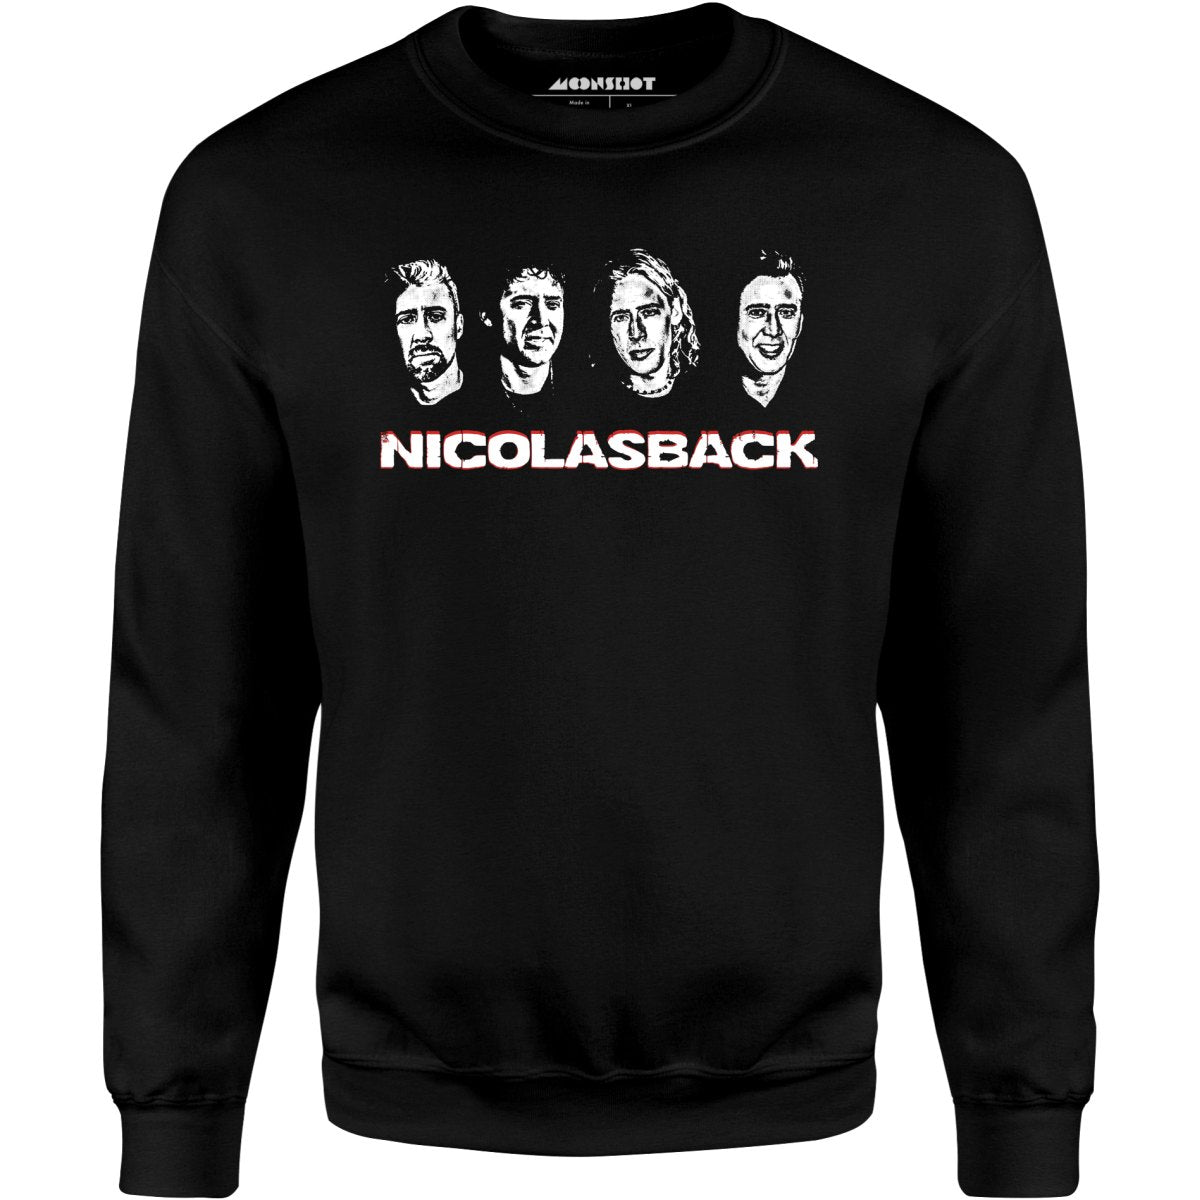 Nicolasback - Nickelback Nicolas Cage Mashup - Unisex Sweatshirt